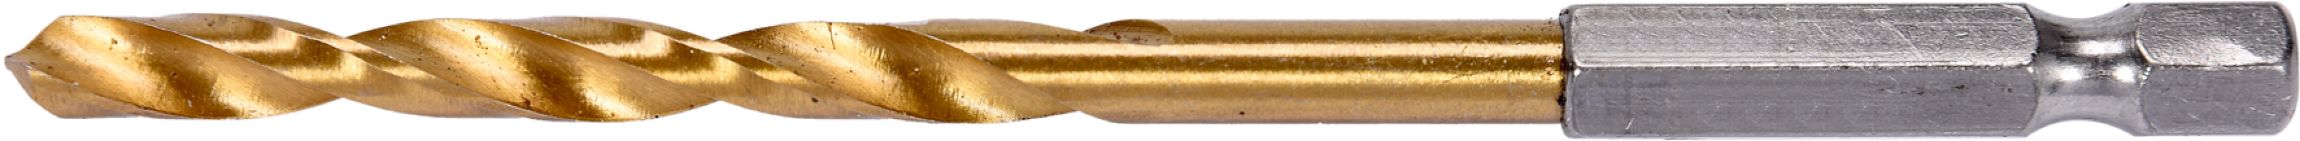 Vrtk do kovu HSS-titan 3,2mm se estihranou stopkou 1/4" Yato YT-44755